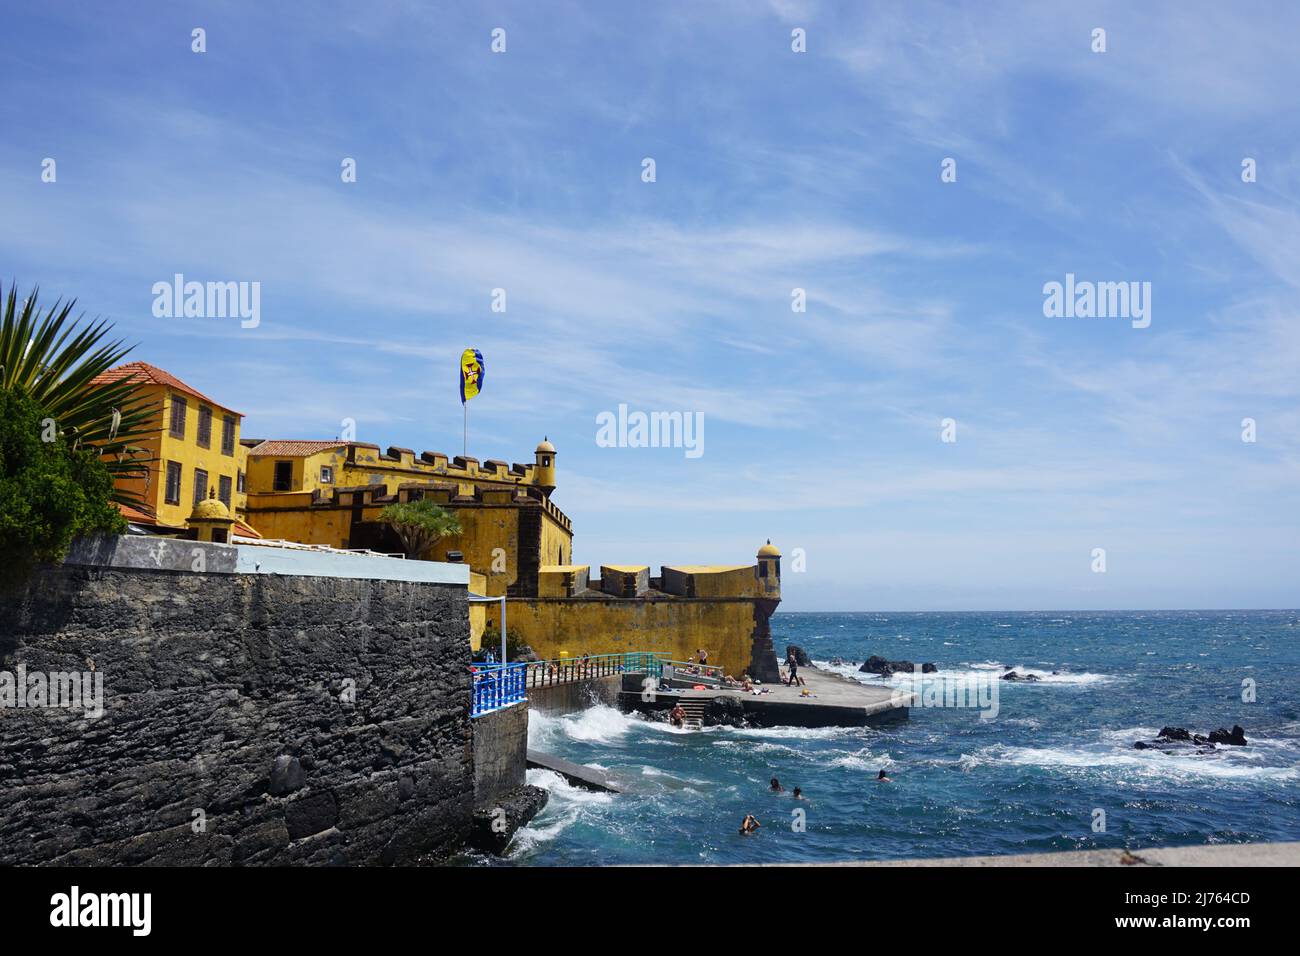 Historic Saint Tiago Fortress ( Forte de São Tiago or Fort of Saint James), Funchal, Madeira, Portugal, Europe. Photo by Matheisl Stock Photo